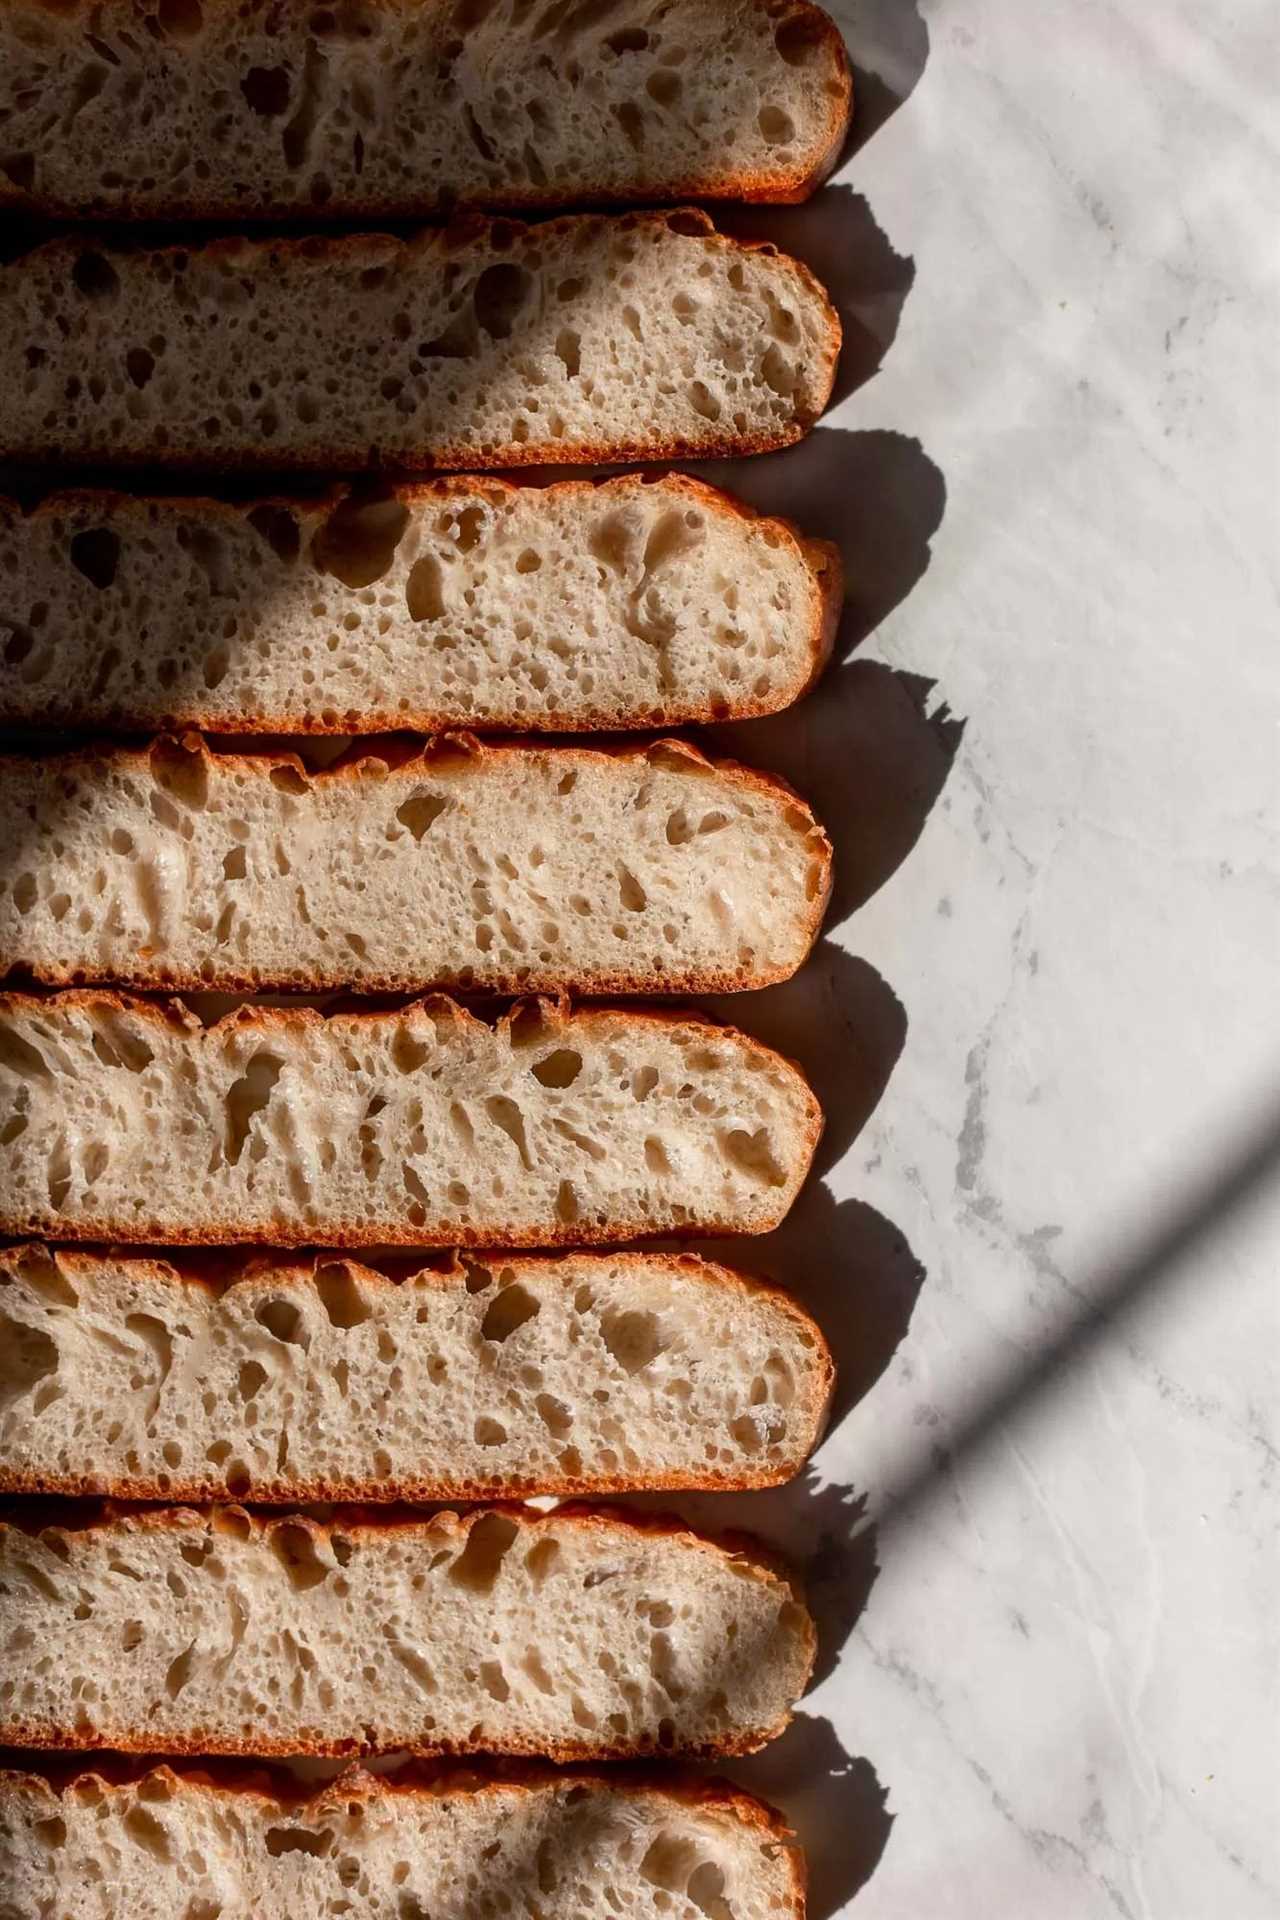 Customizable Sourdough Focaccia Bread From Scratch